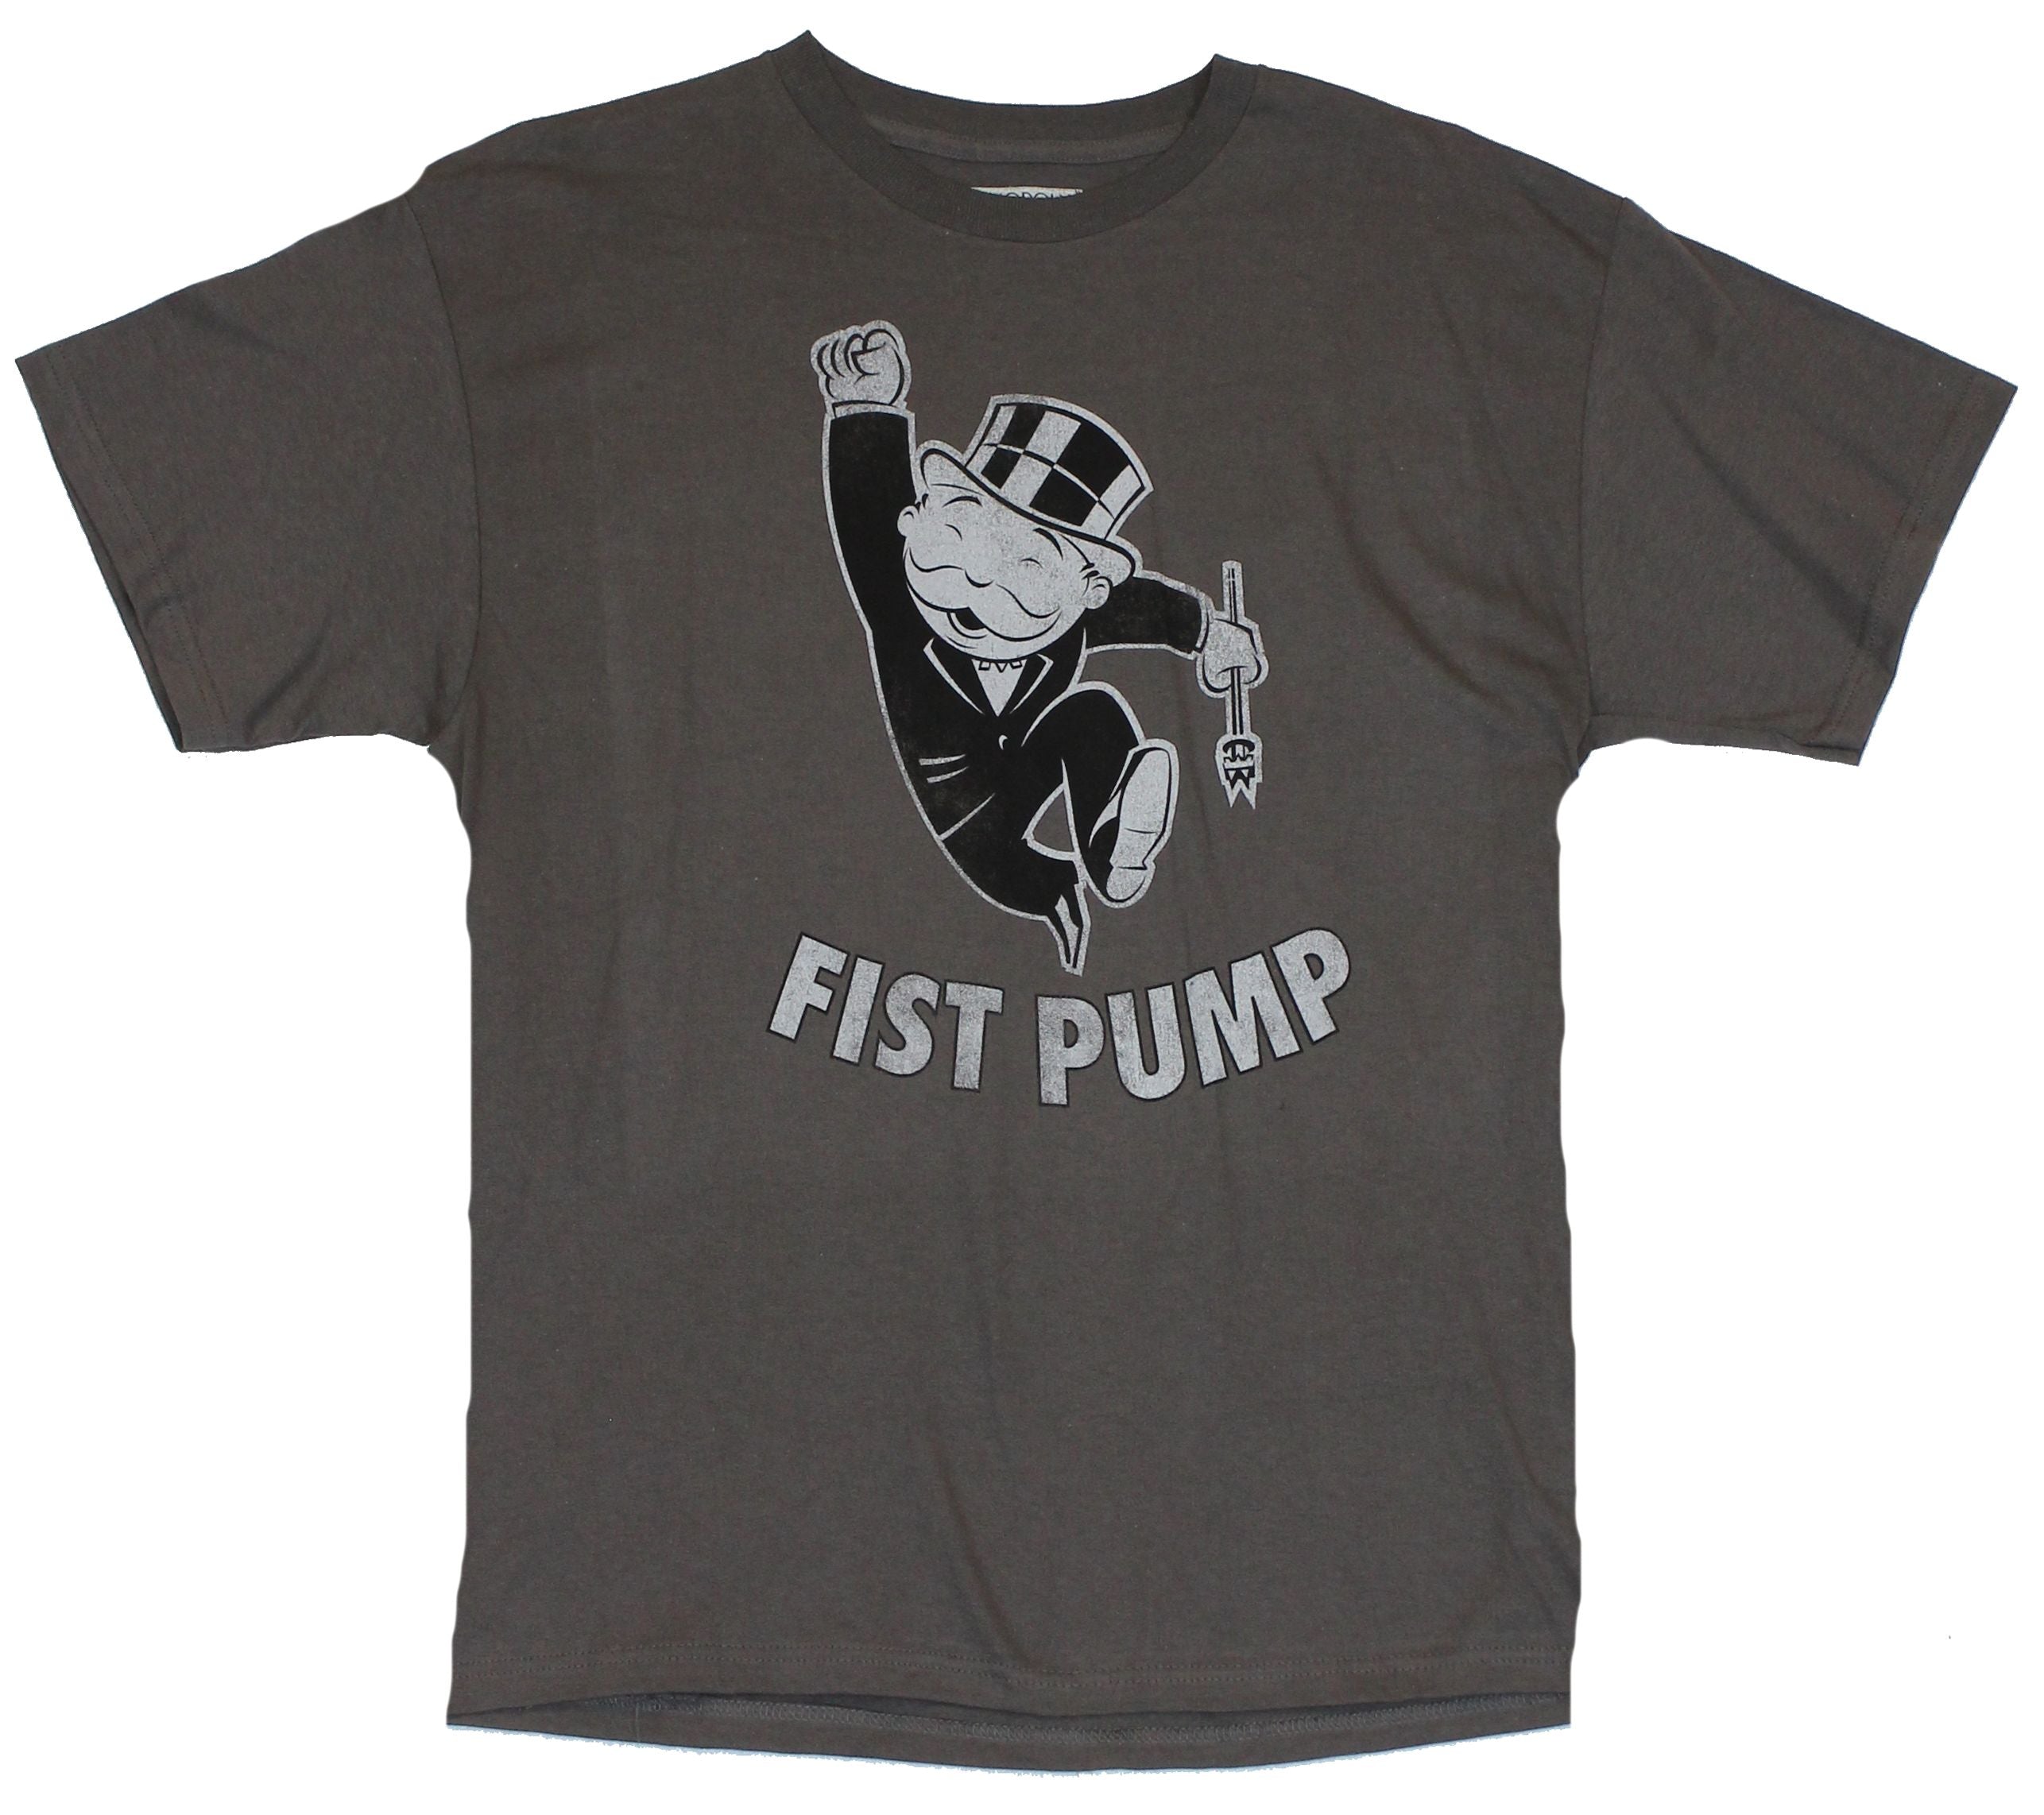 Monopoly Mens T-Shirt - "Fist Pump" Heel Clicking Celebrating Image